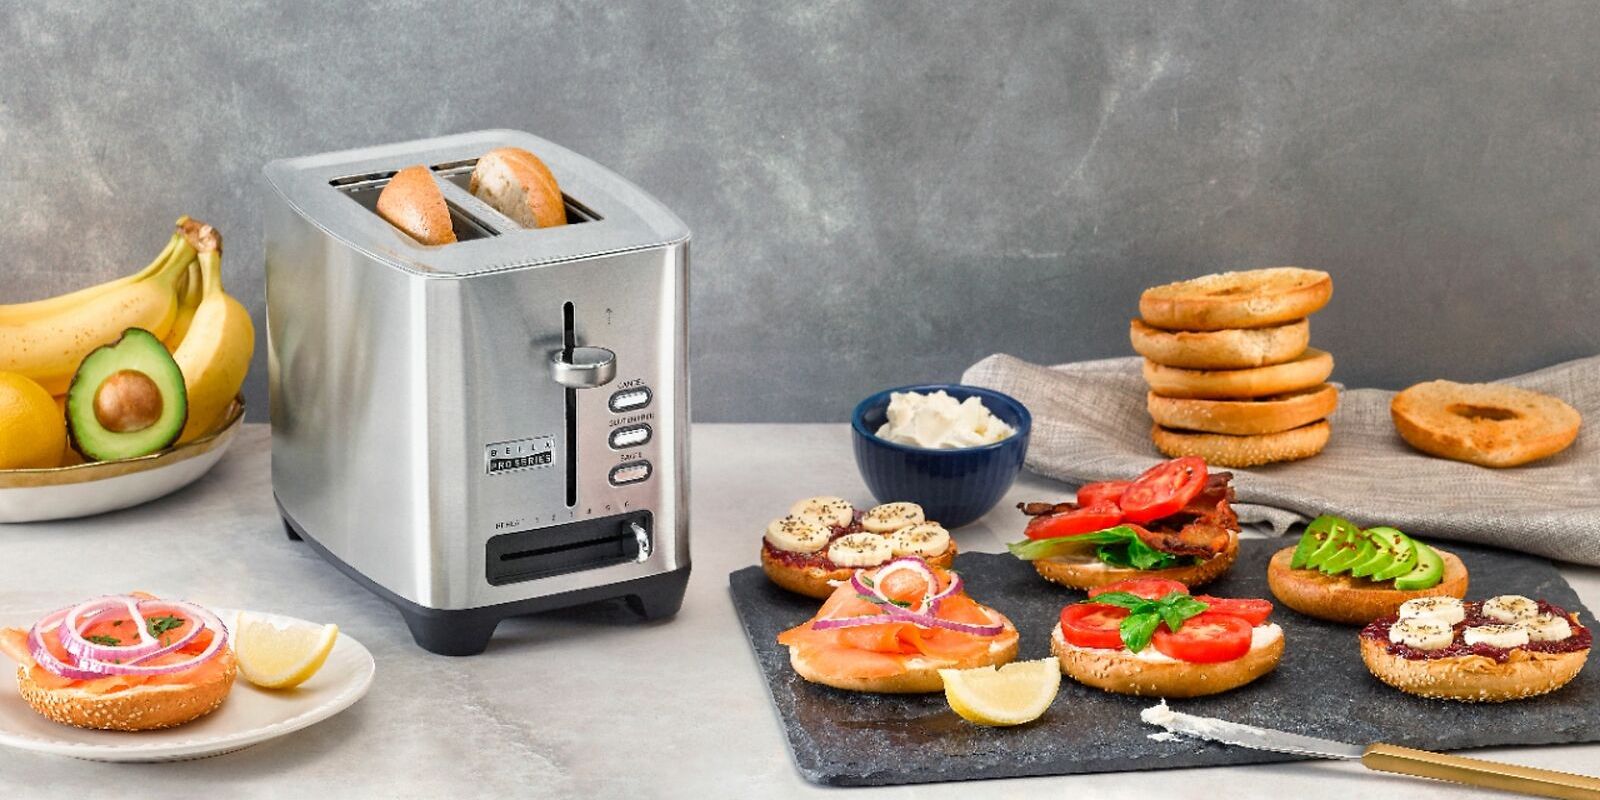 https://9to5toys.com/wp-content/uploads/sites/5/2020/04/Bella-Pro-Series-2-Slice-Toaster.jpg